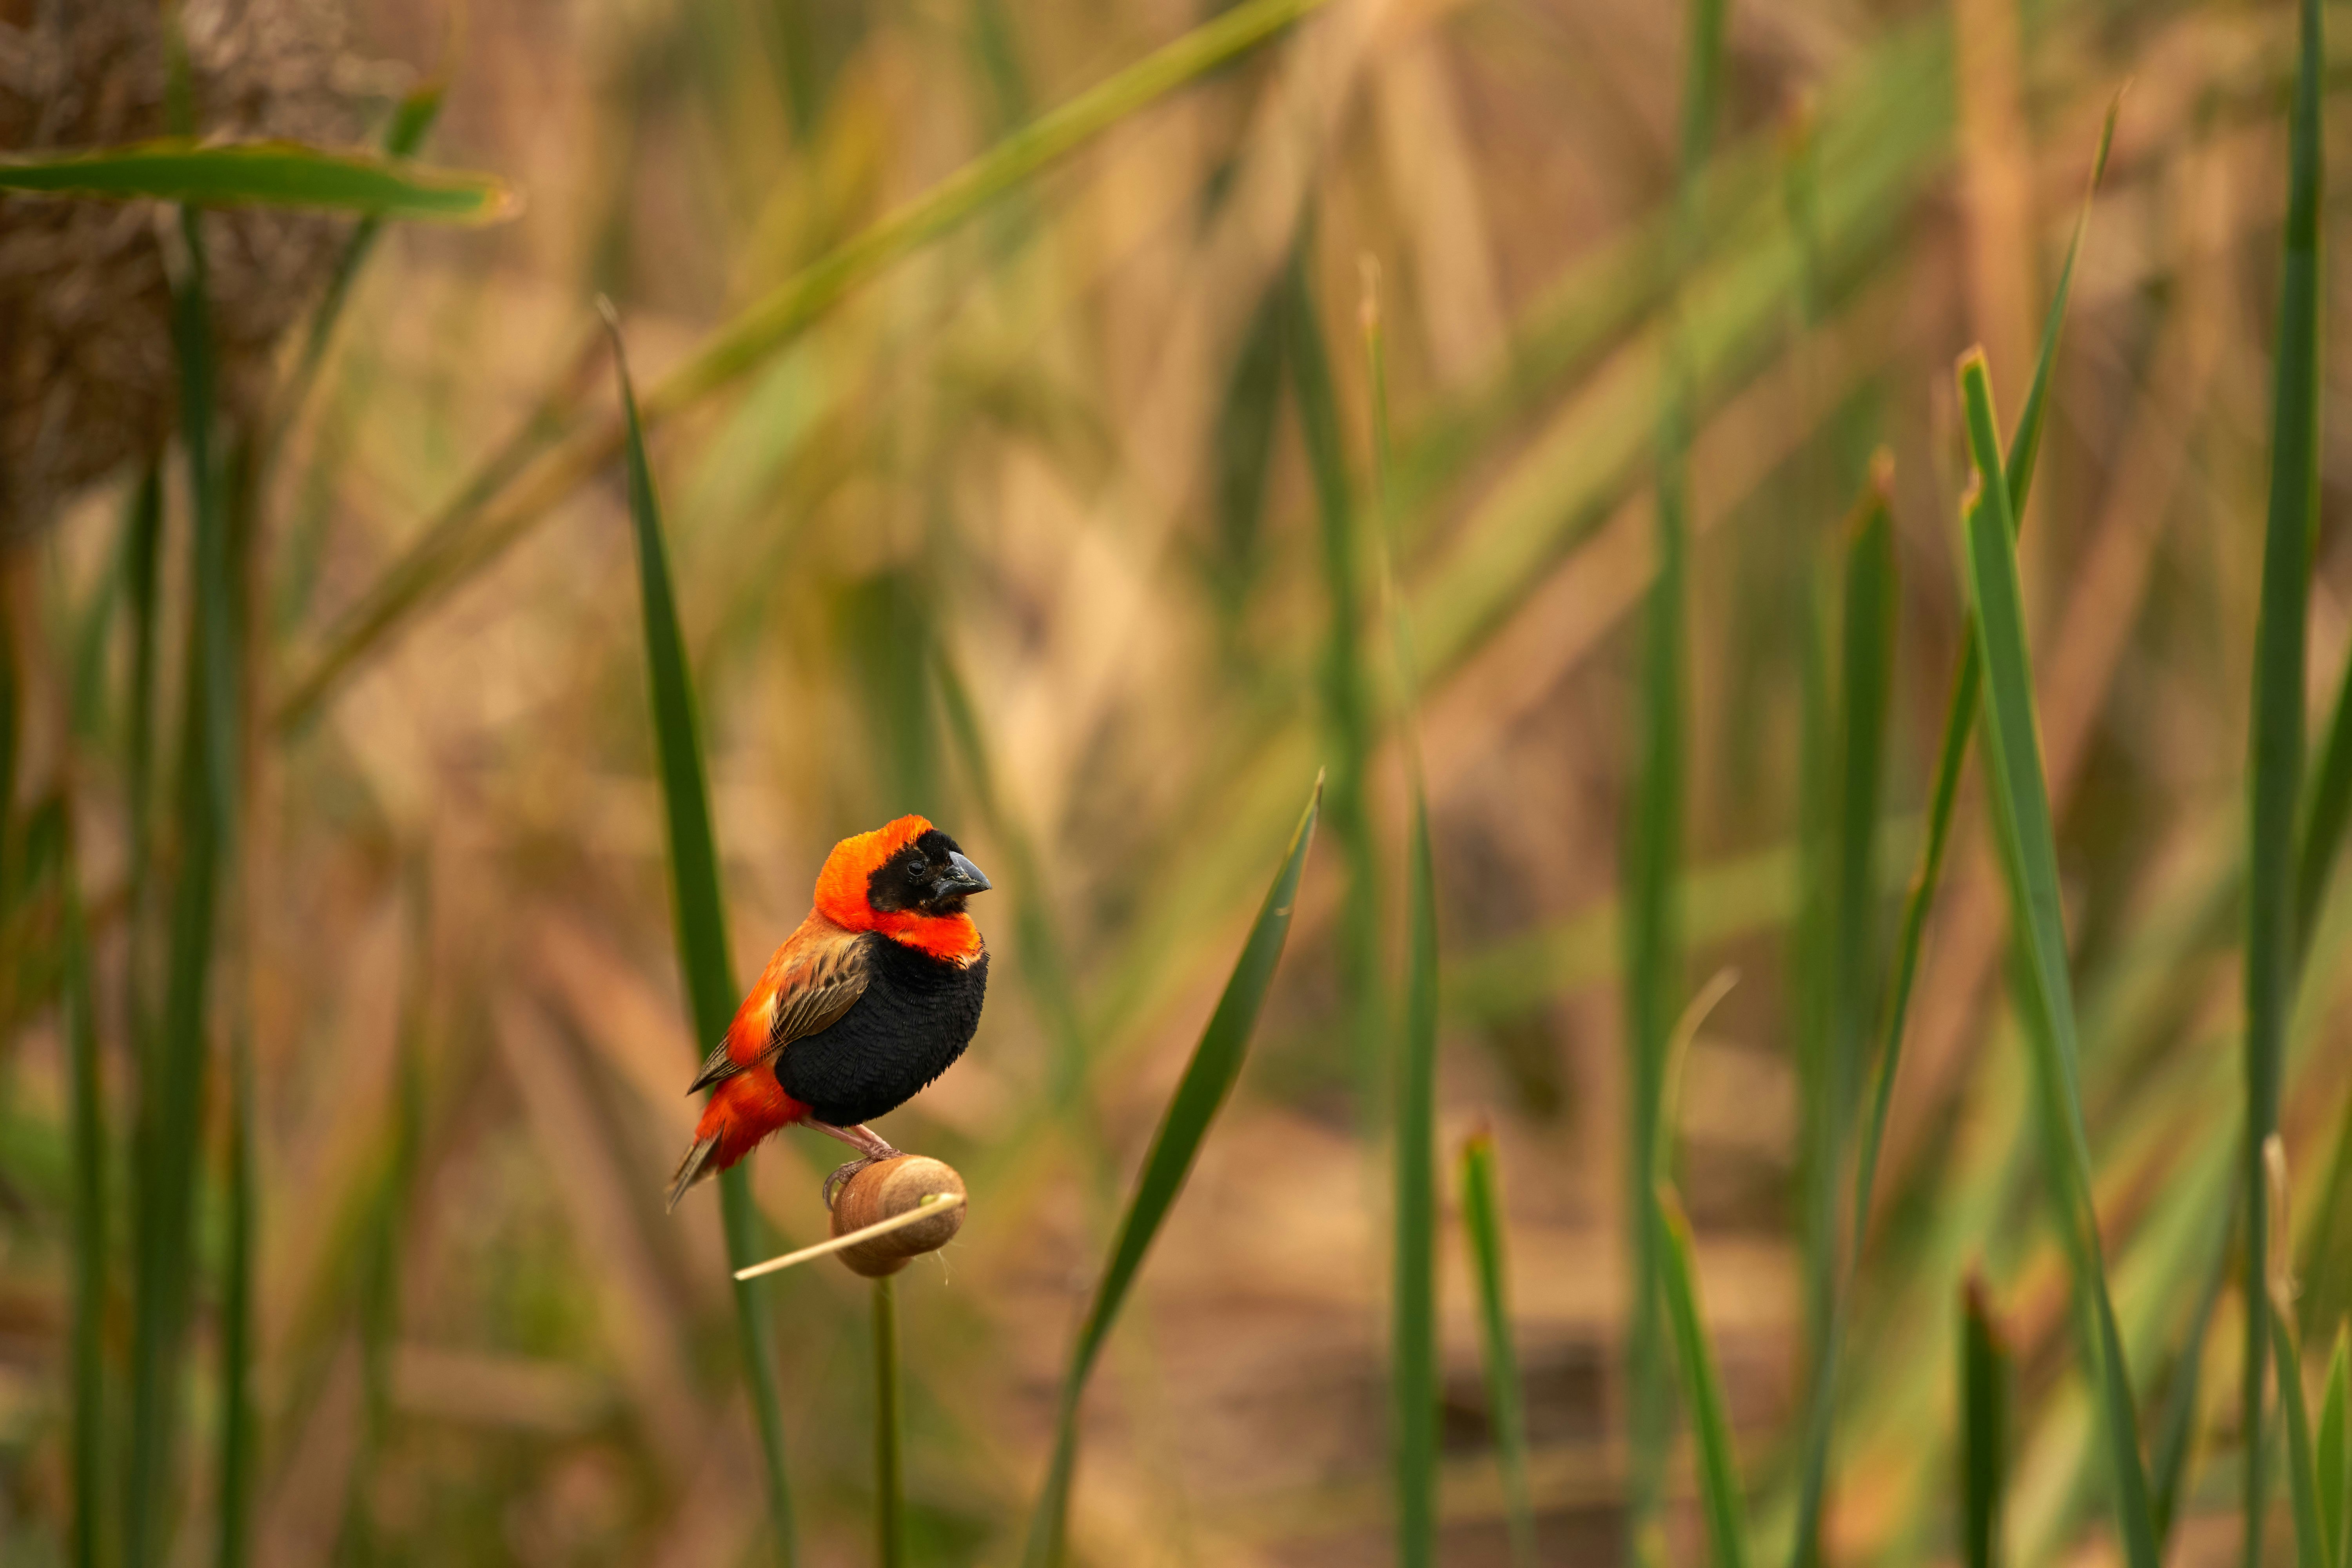 orange and black bird on green grass during daytime